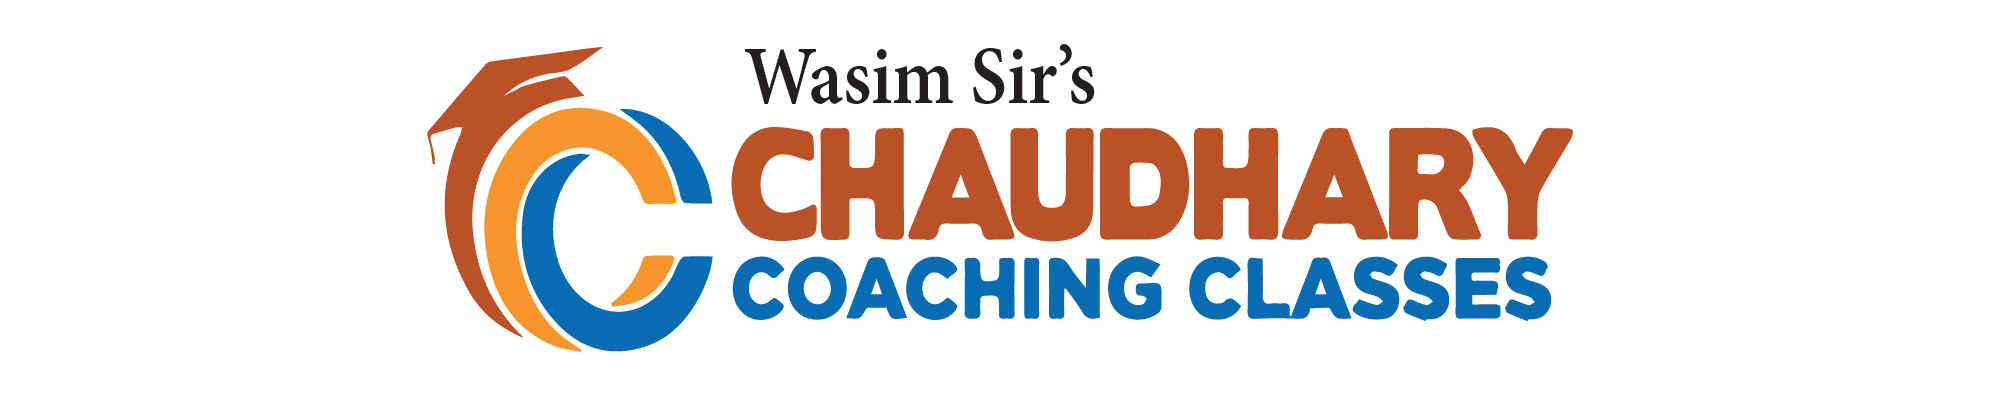 Wasim Sir's Chaudhary Coaching Classes - Logo